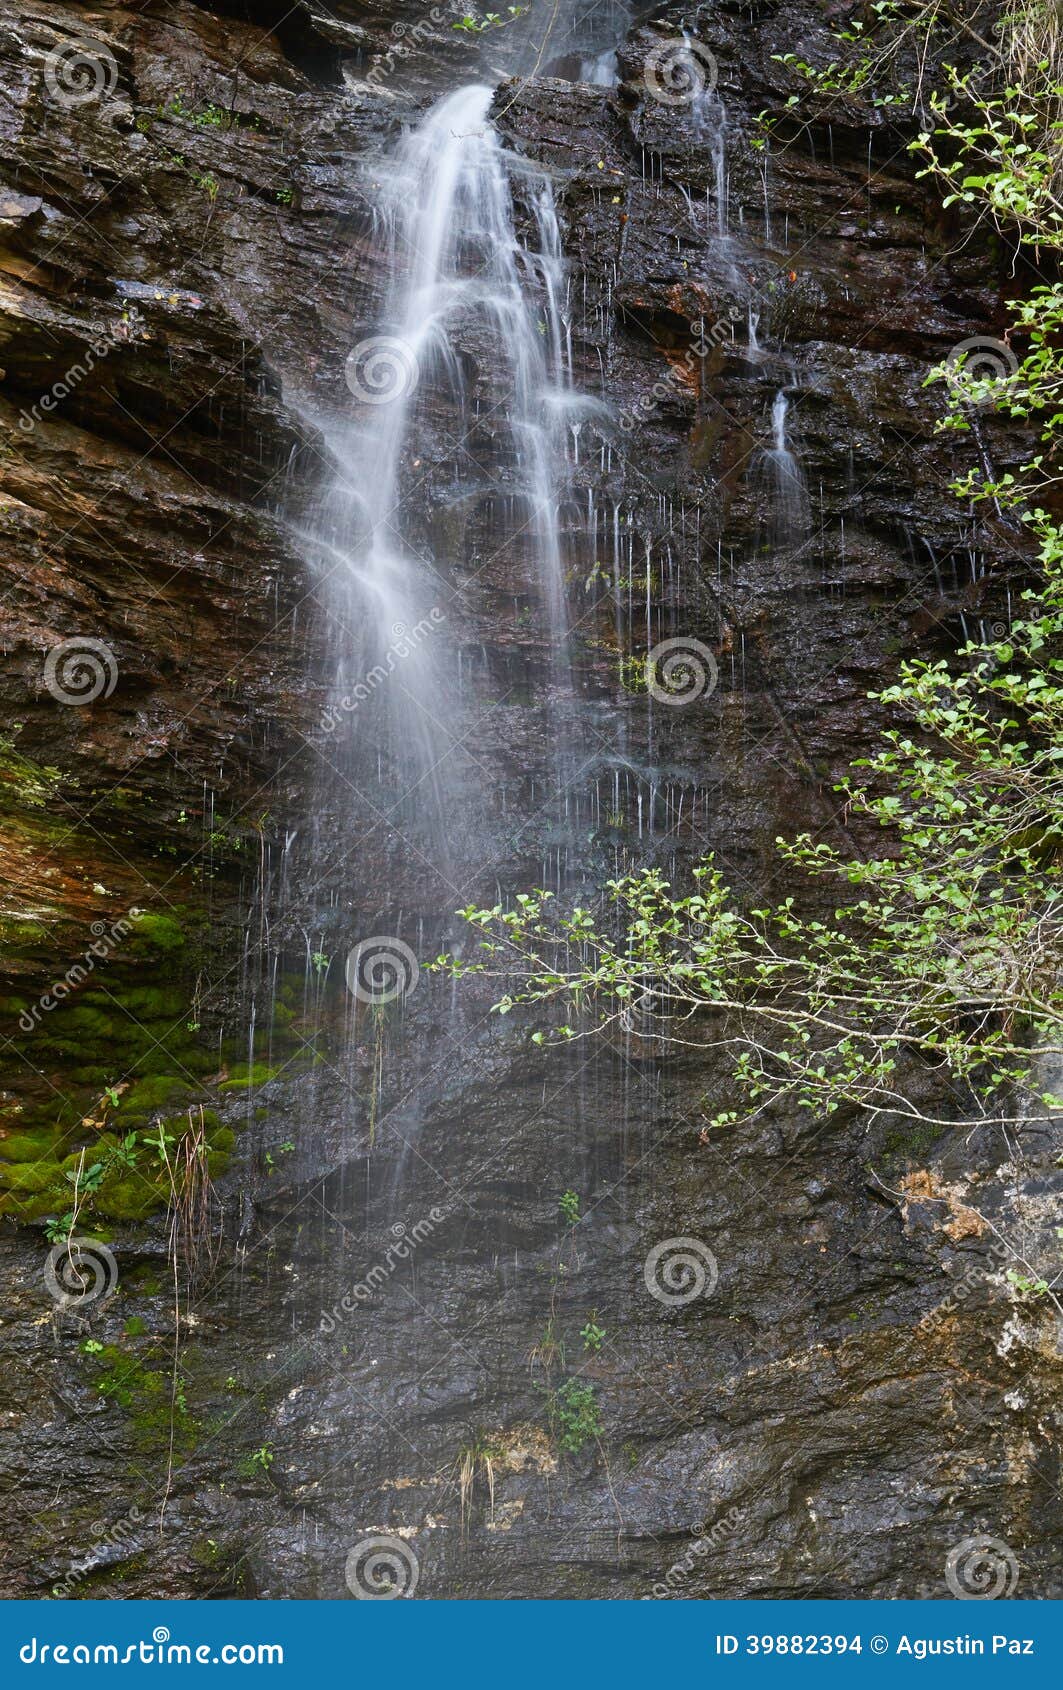 pena branca river waterfall in folgoso do courel, lugo, spain